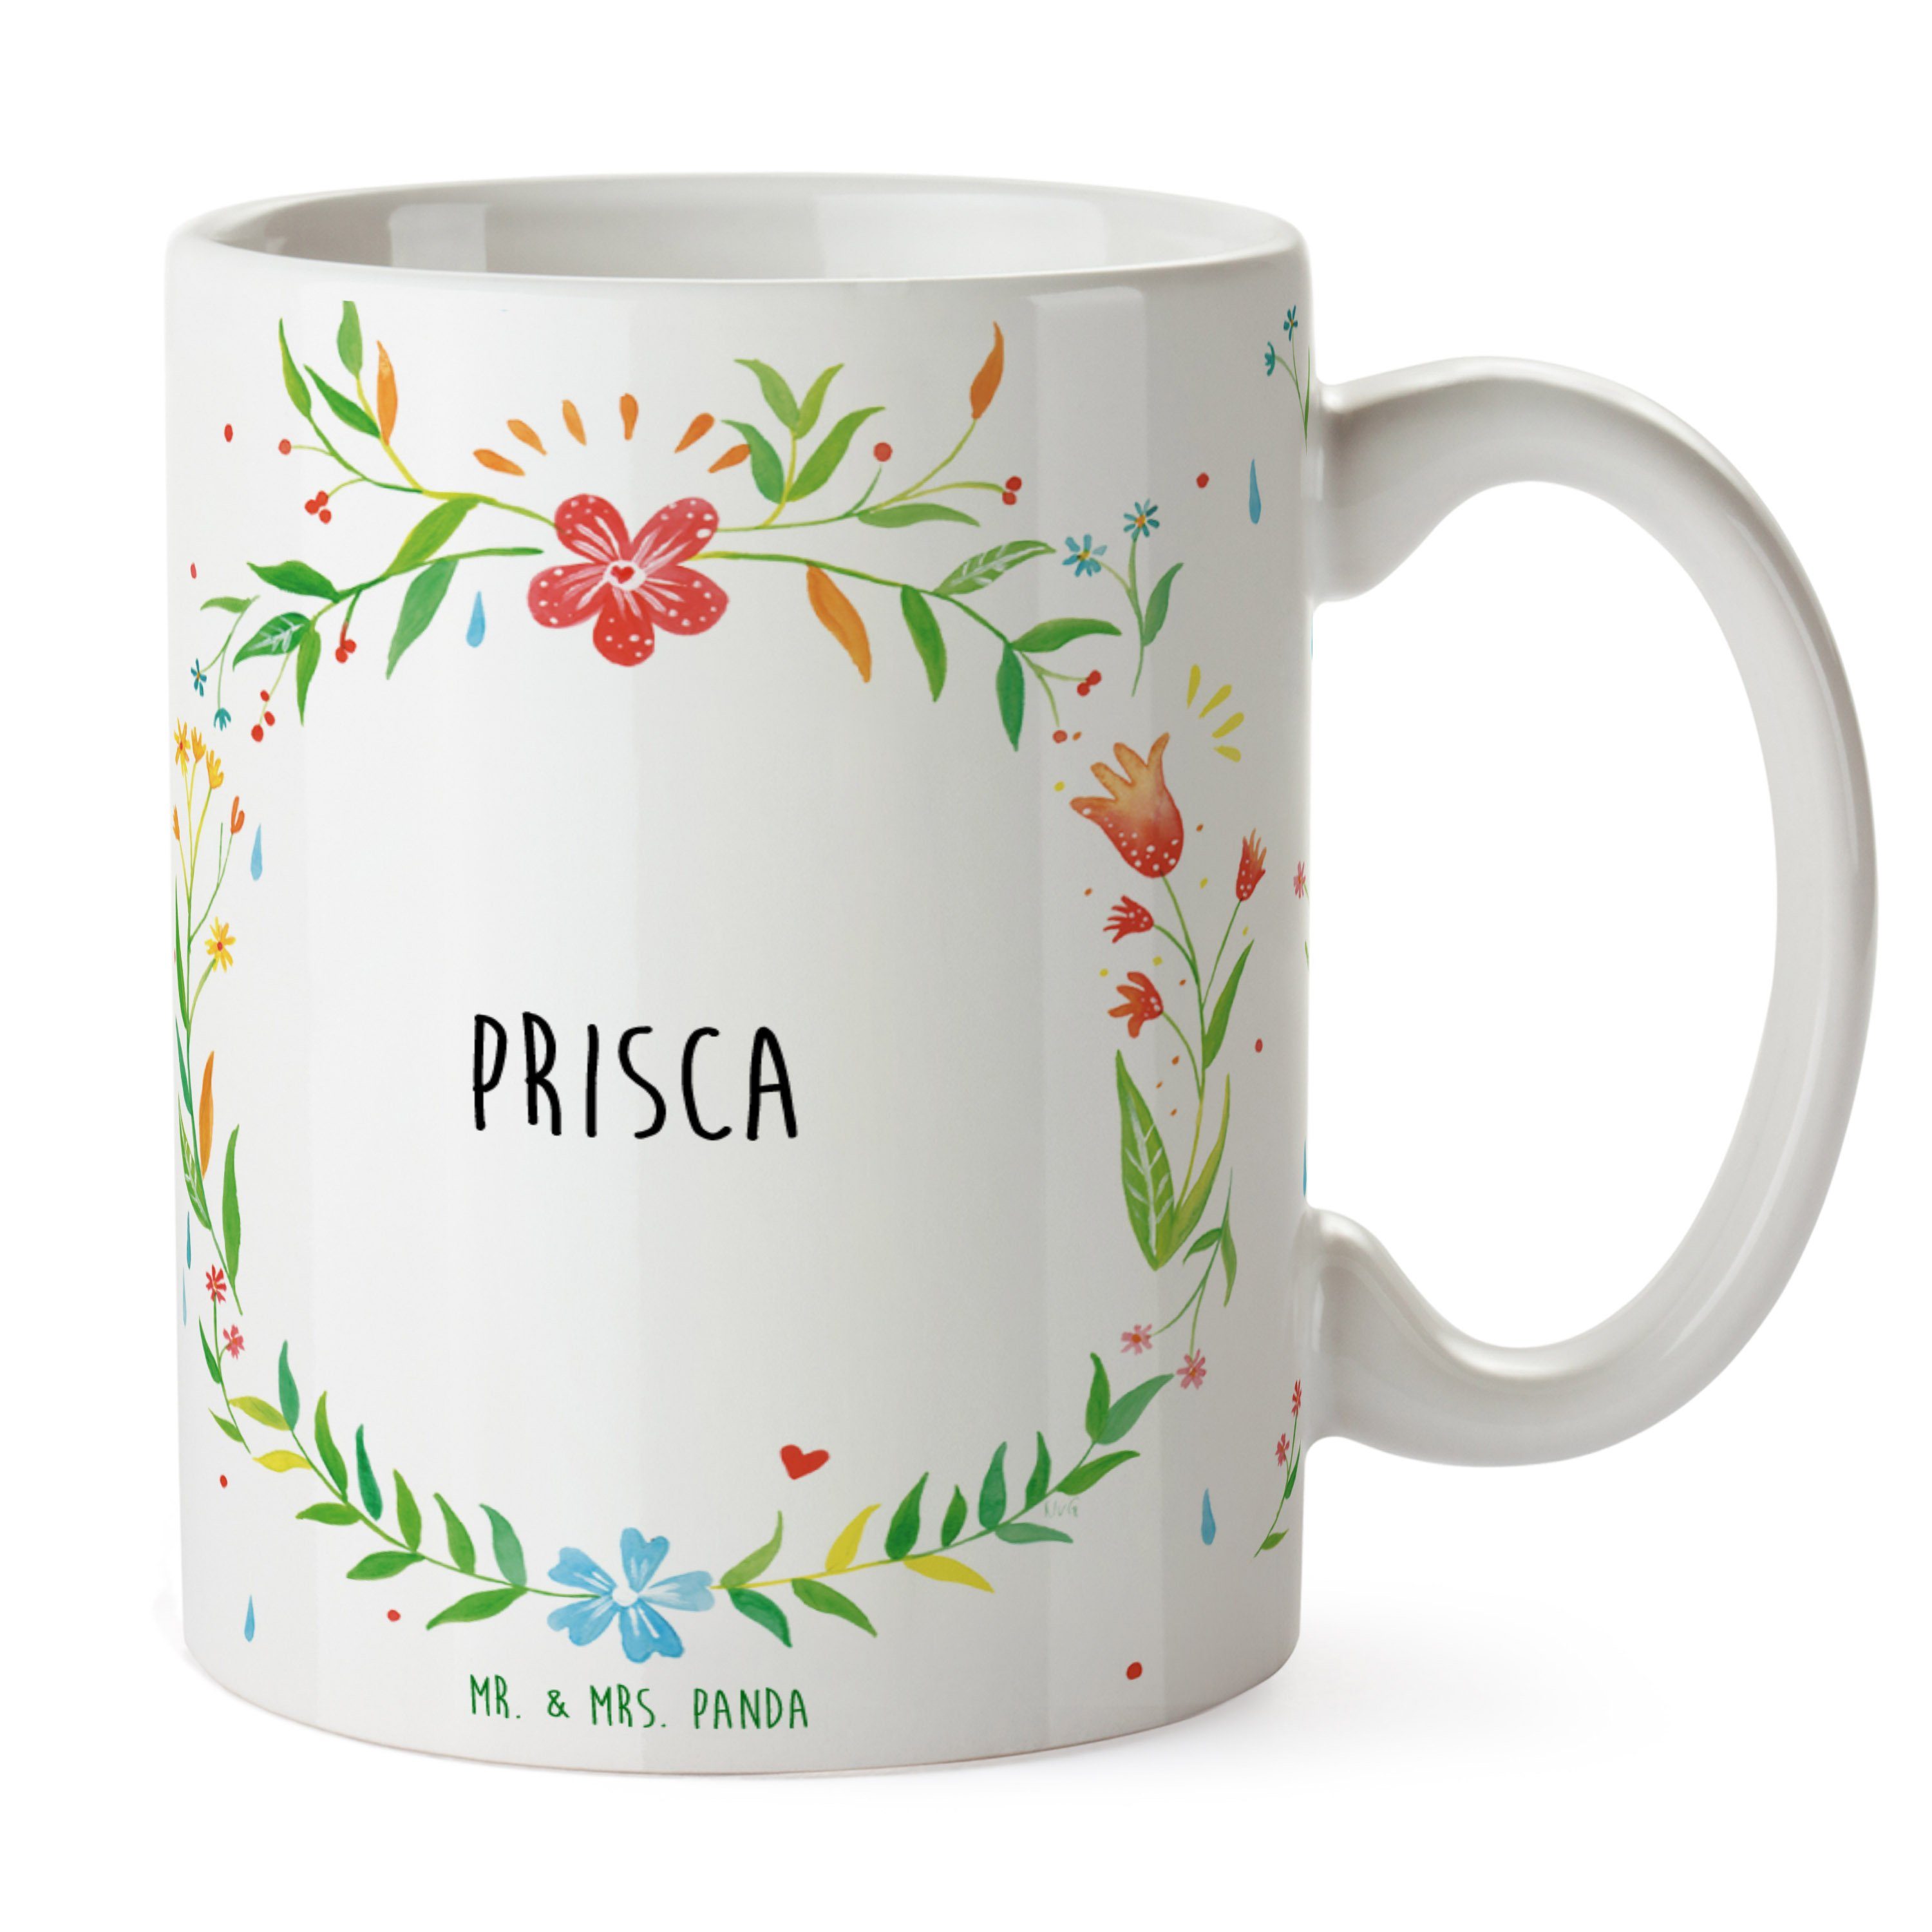 Mr. & Mrs. Panda Tasse Geschenk, Prisca Teetasse, Keramiktasse, Keramik - Büro Kaffee, Becher, Tasse